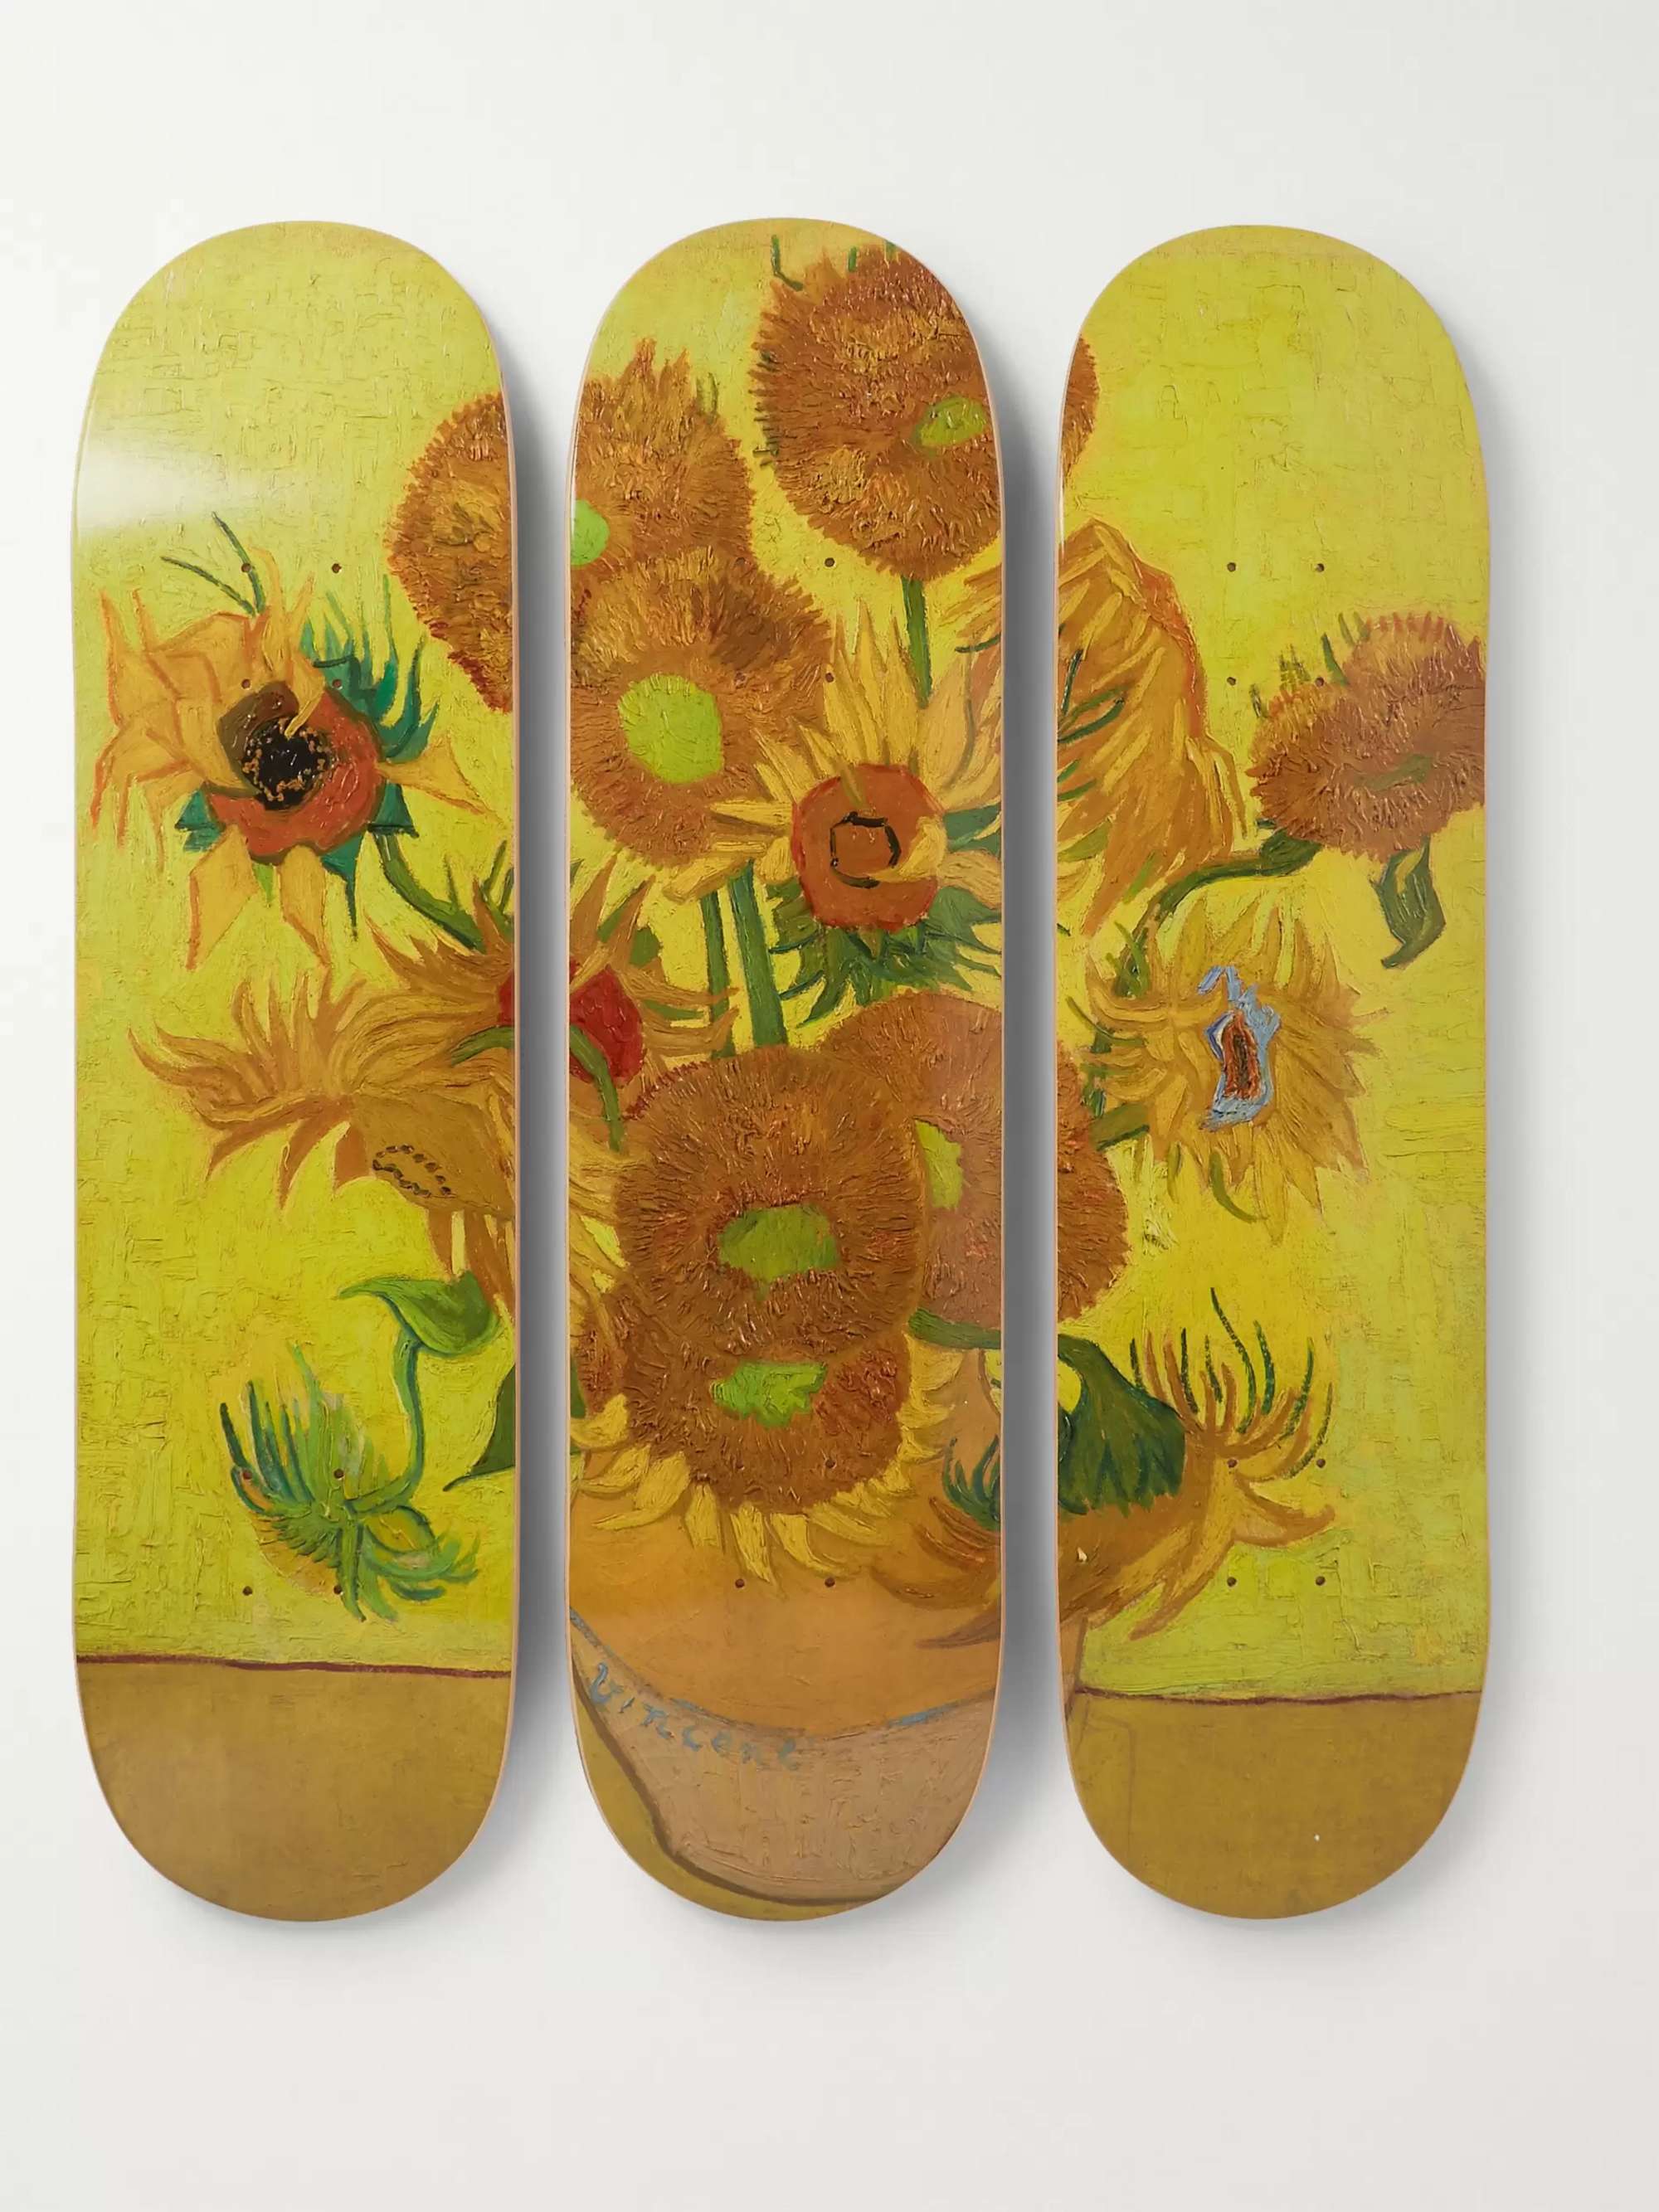 THE SKATEROOM + Vincent Van Gogh Set of Three Printed Wooden Skateboards